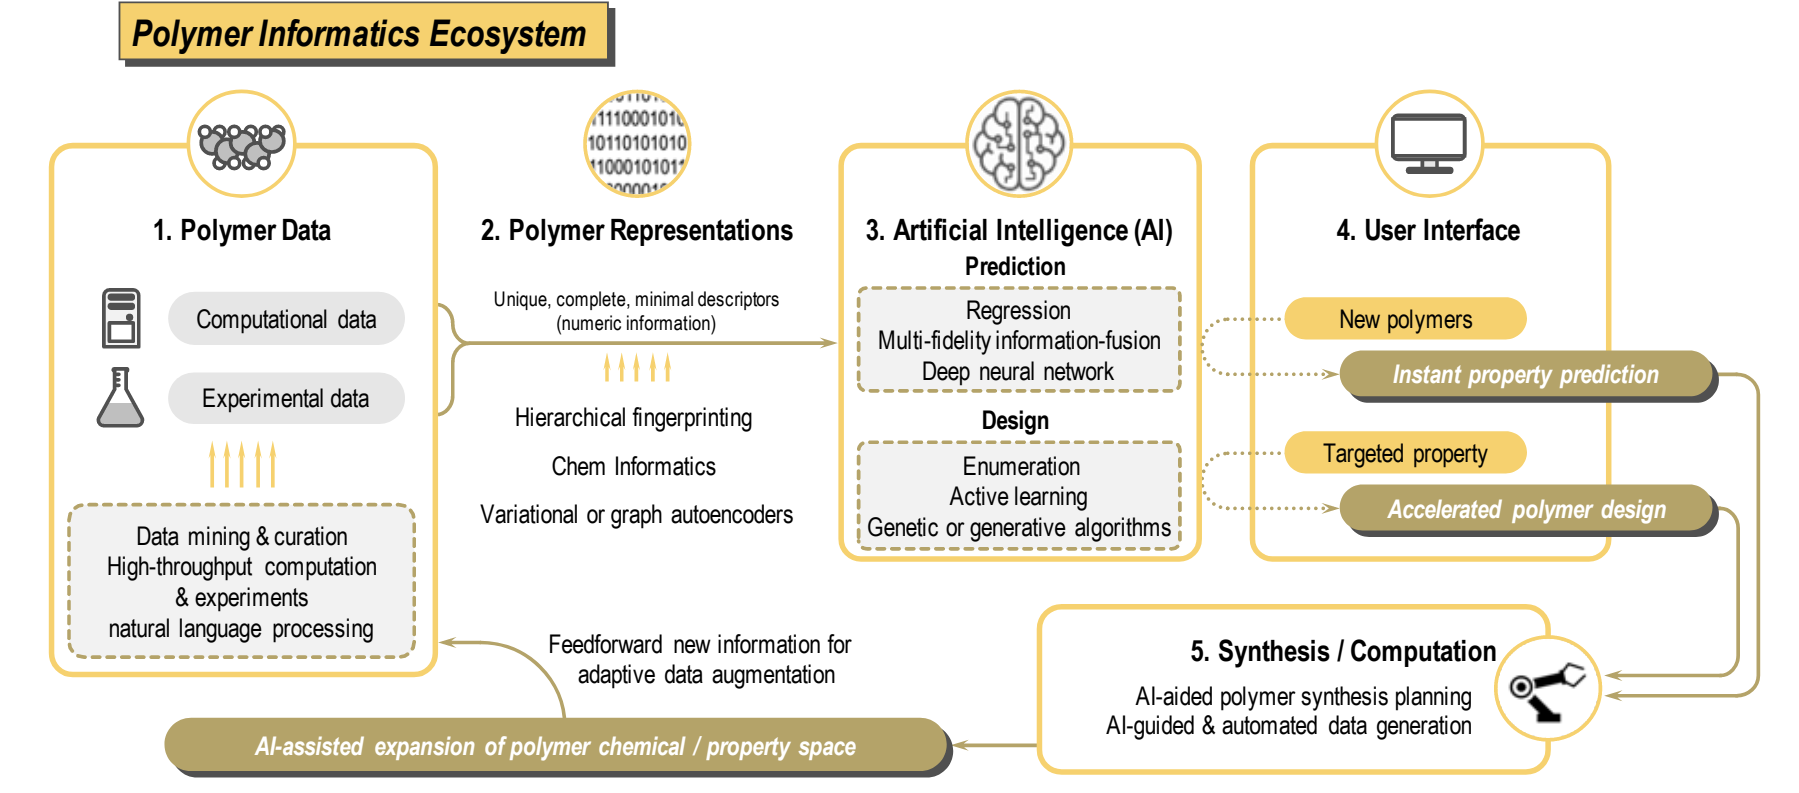 polymer informatics ecosystem